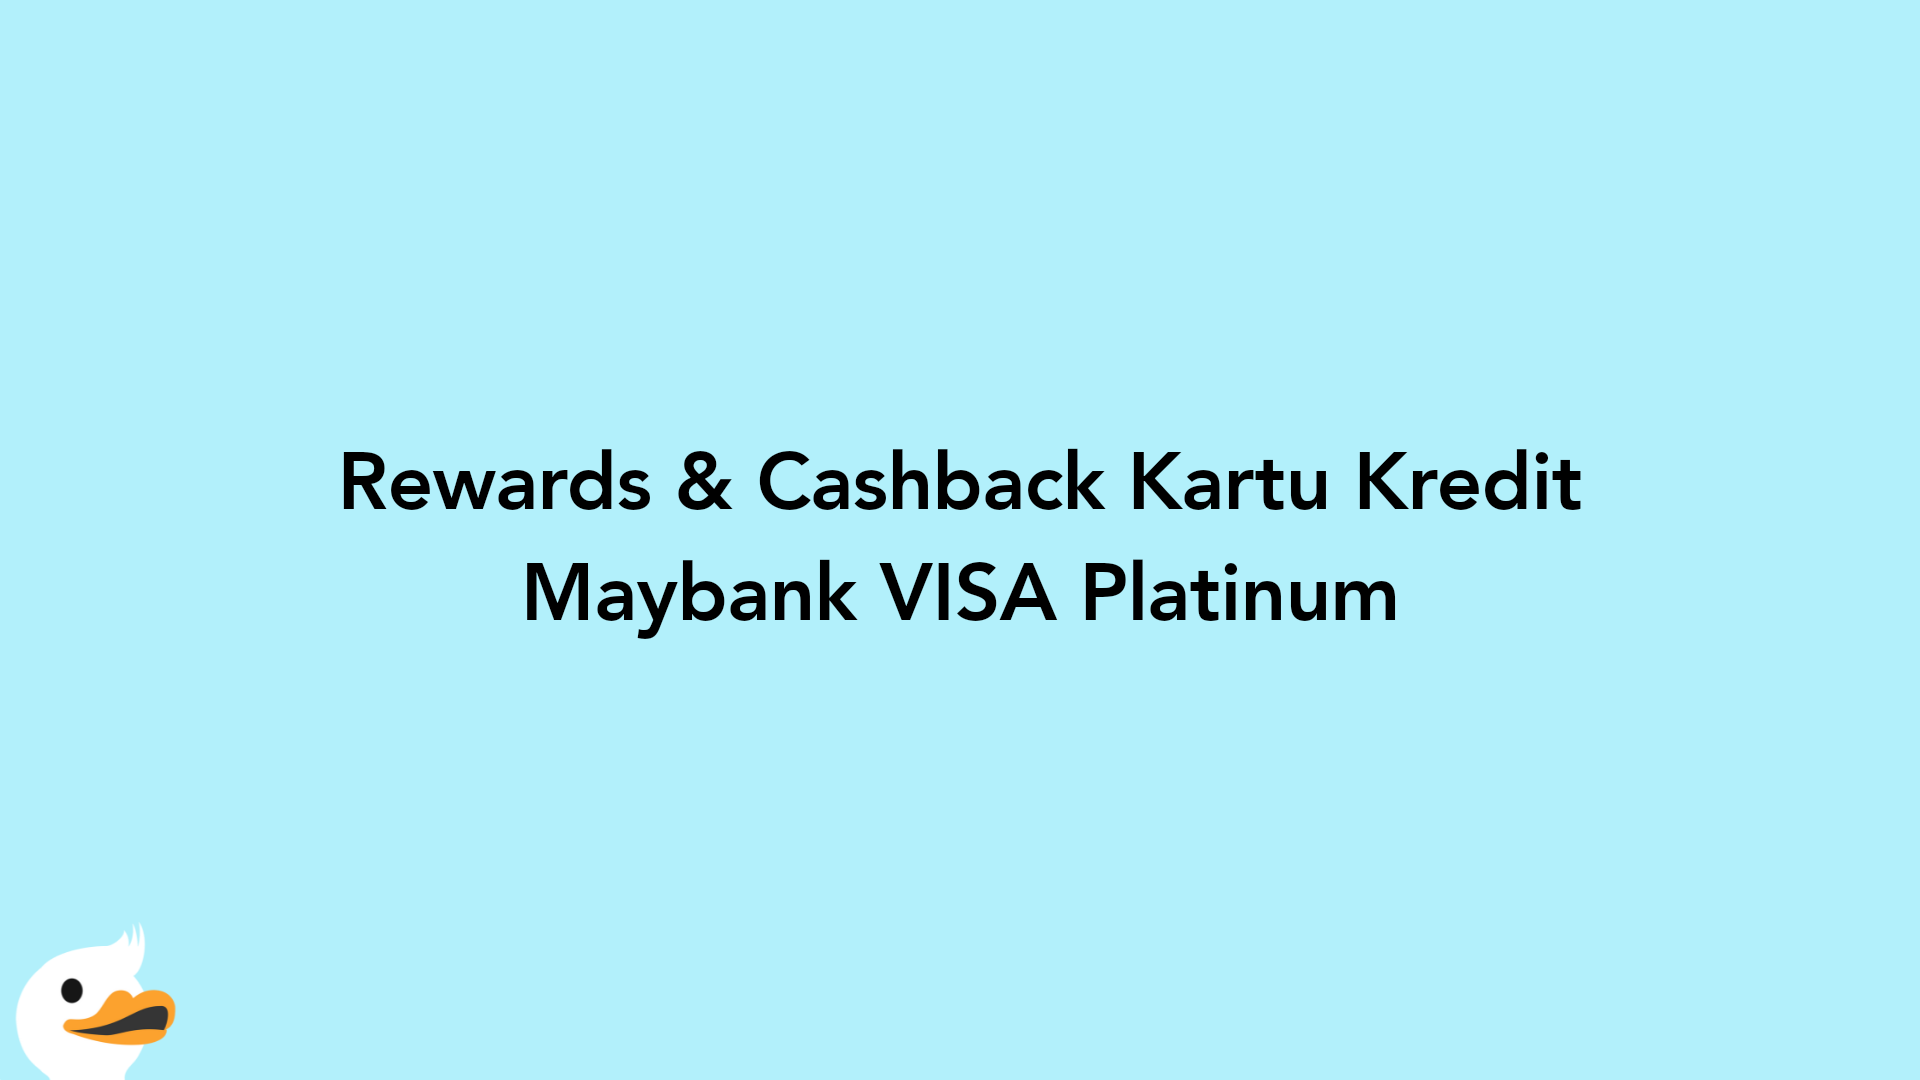 Rewards & Cashback Kartu Kredit Maybank VISA Platinum